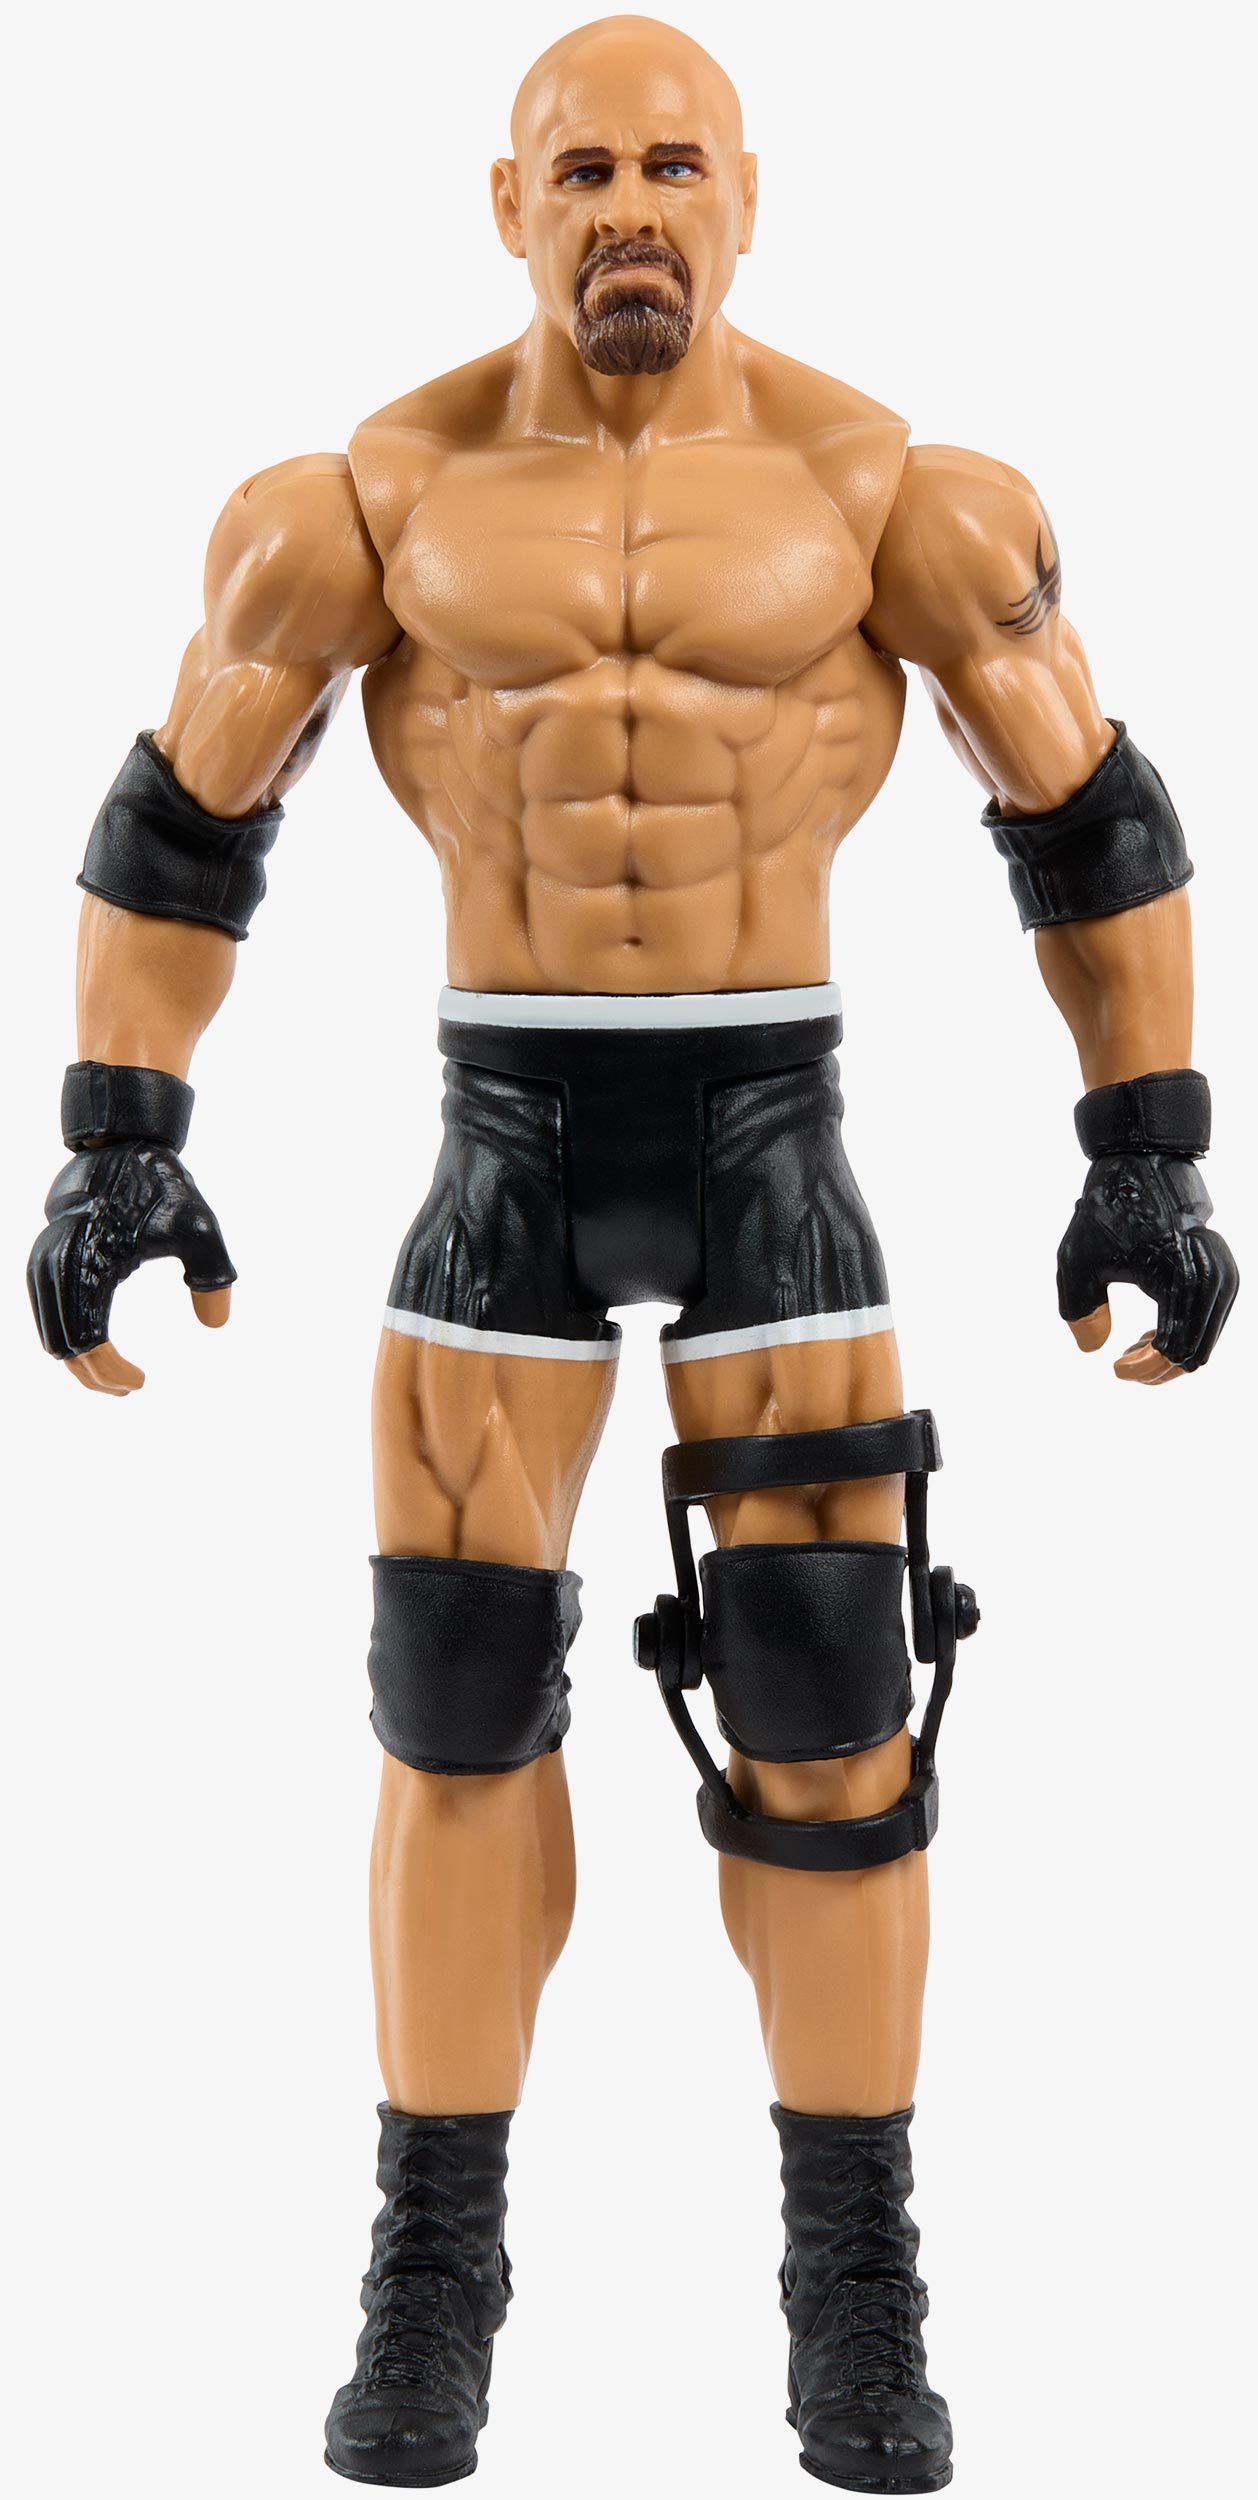 Goldberg - WWE Basic Series #136